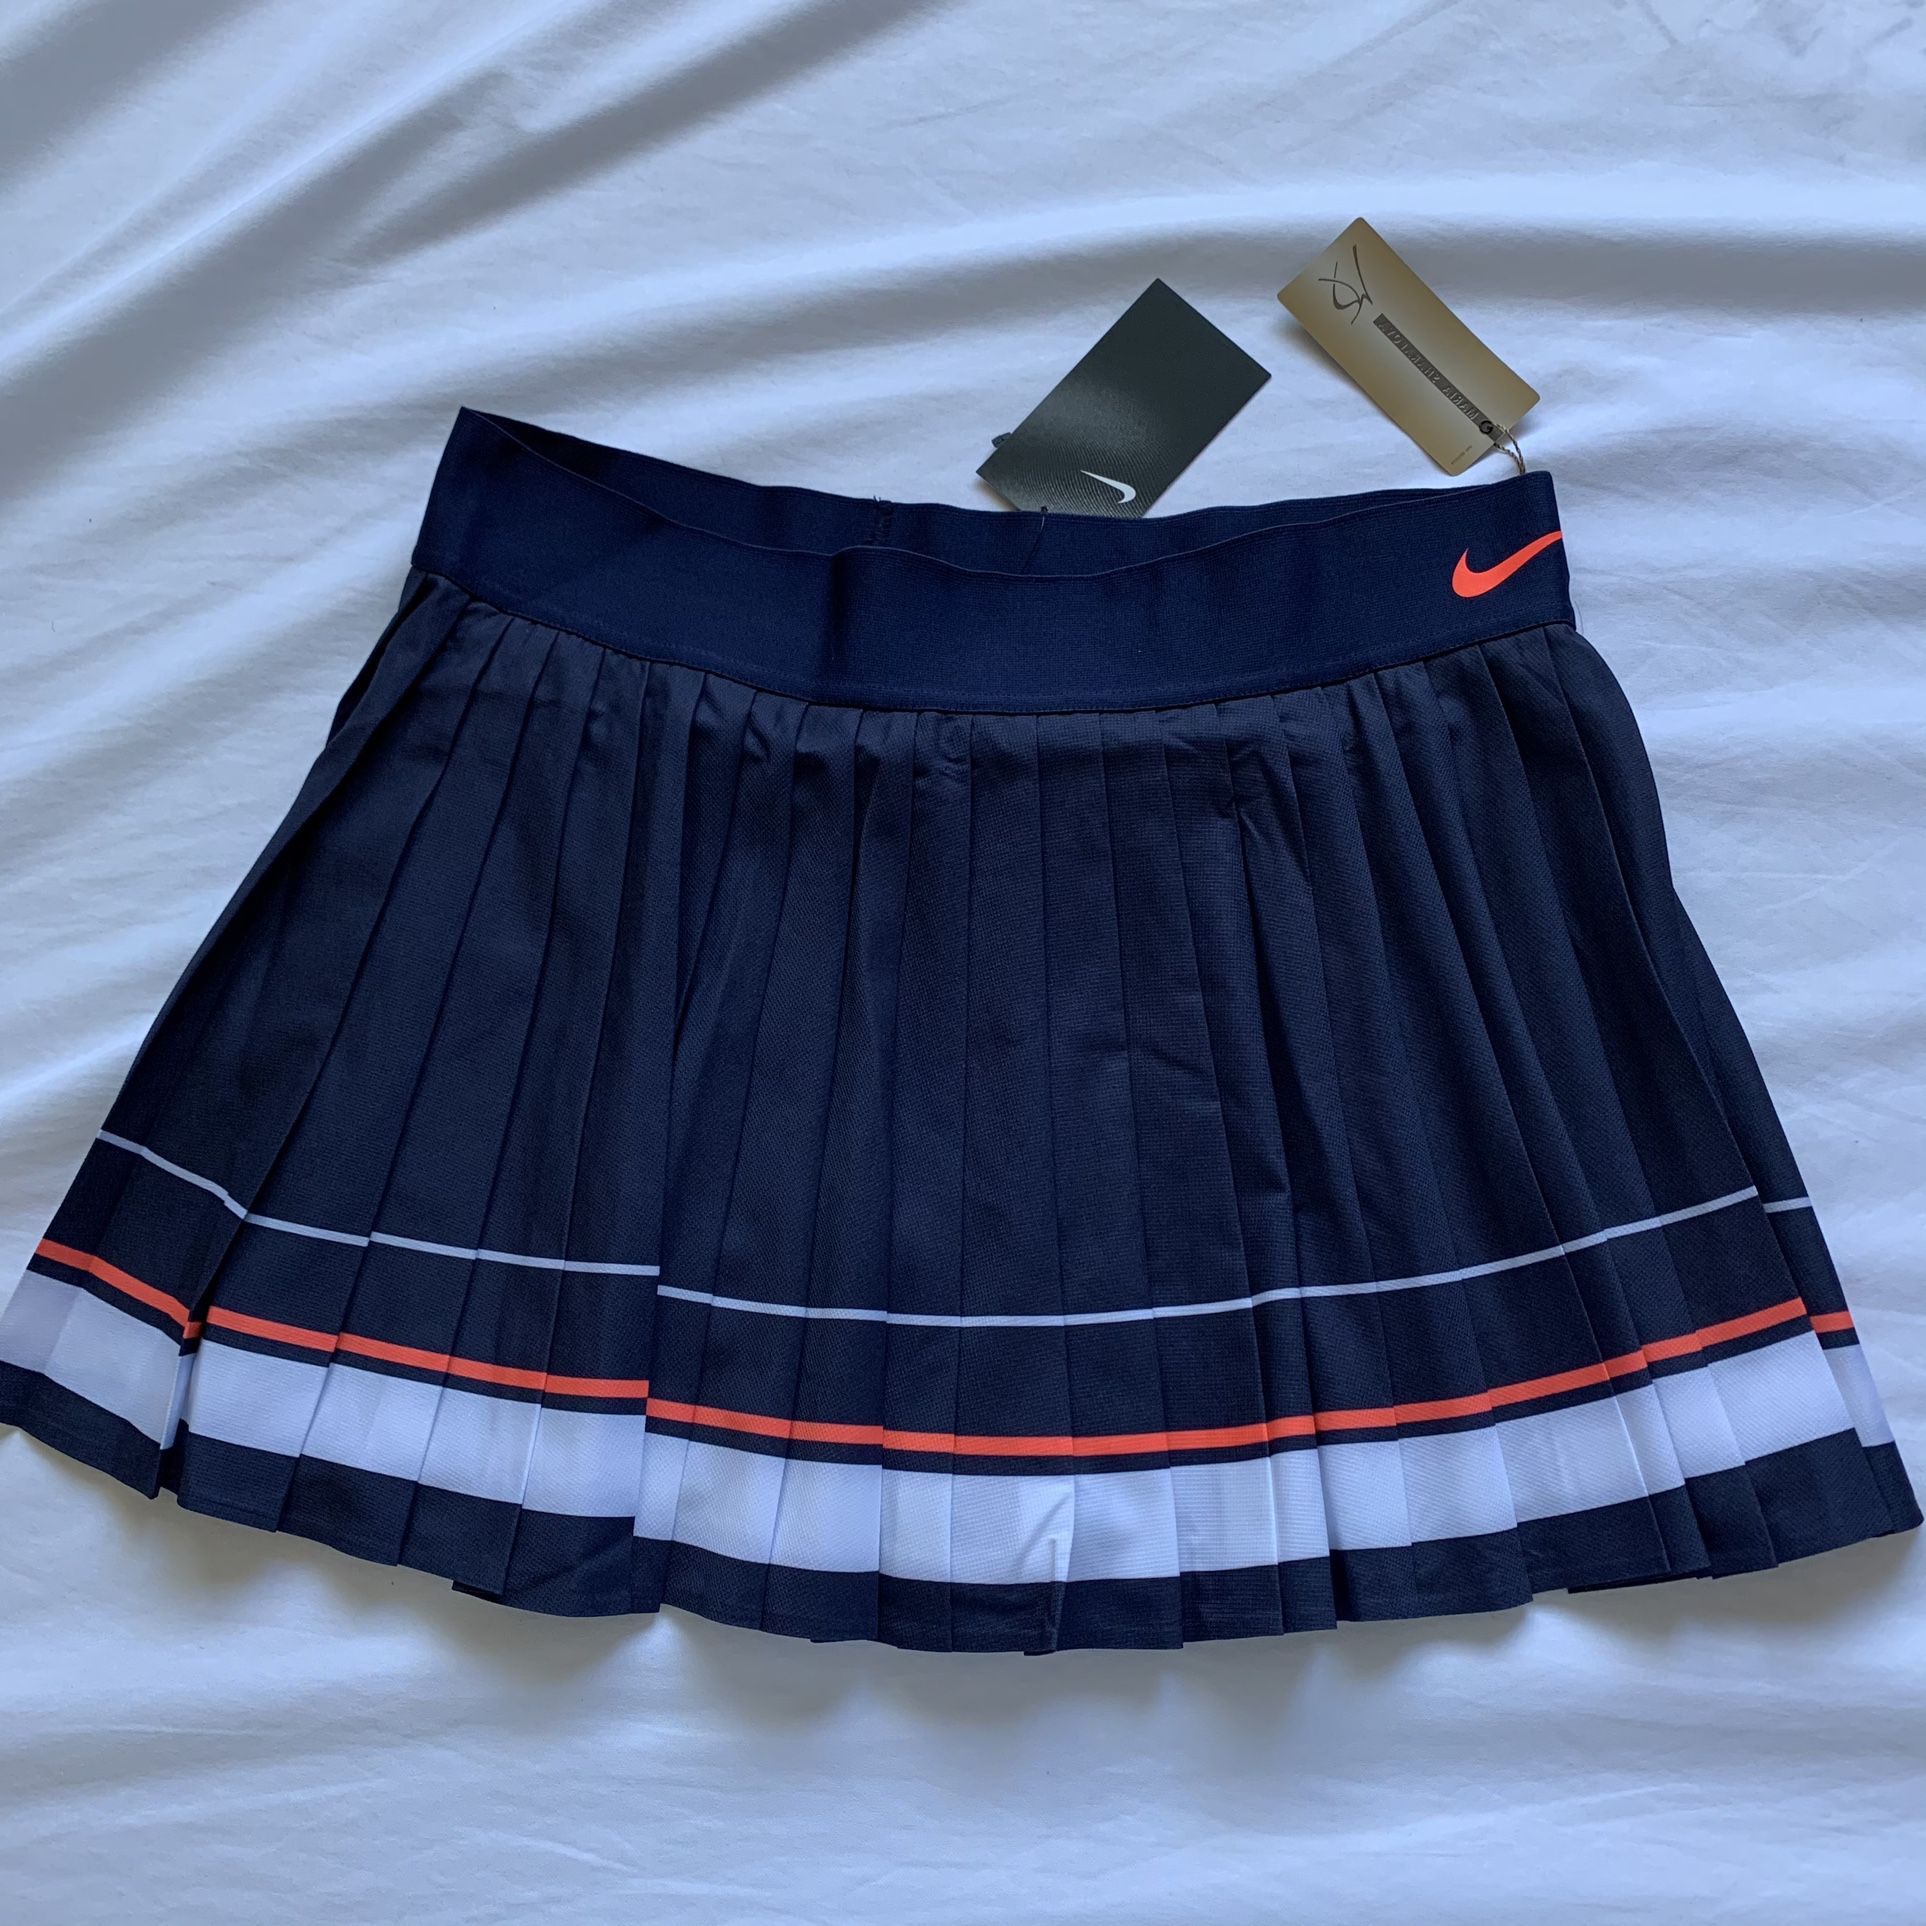 maria sharapova tennis skirt CI9386-451 size for Sale in Gardena, CA -